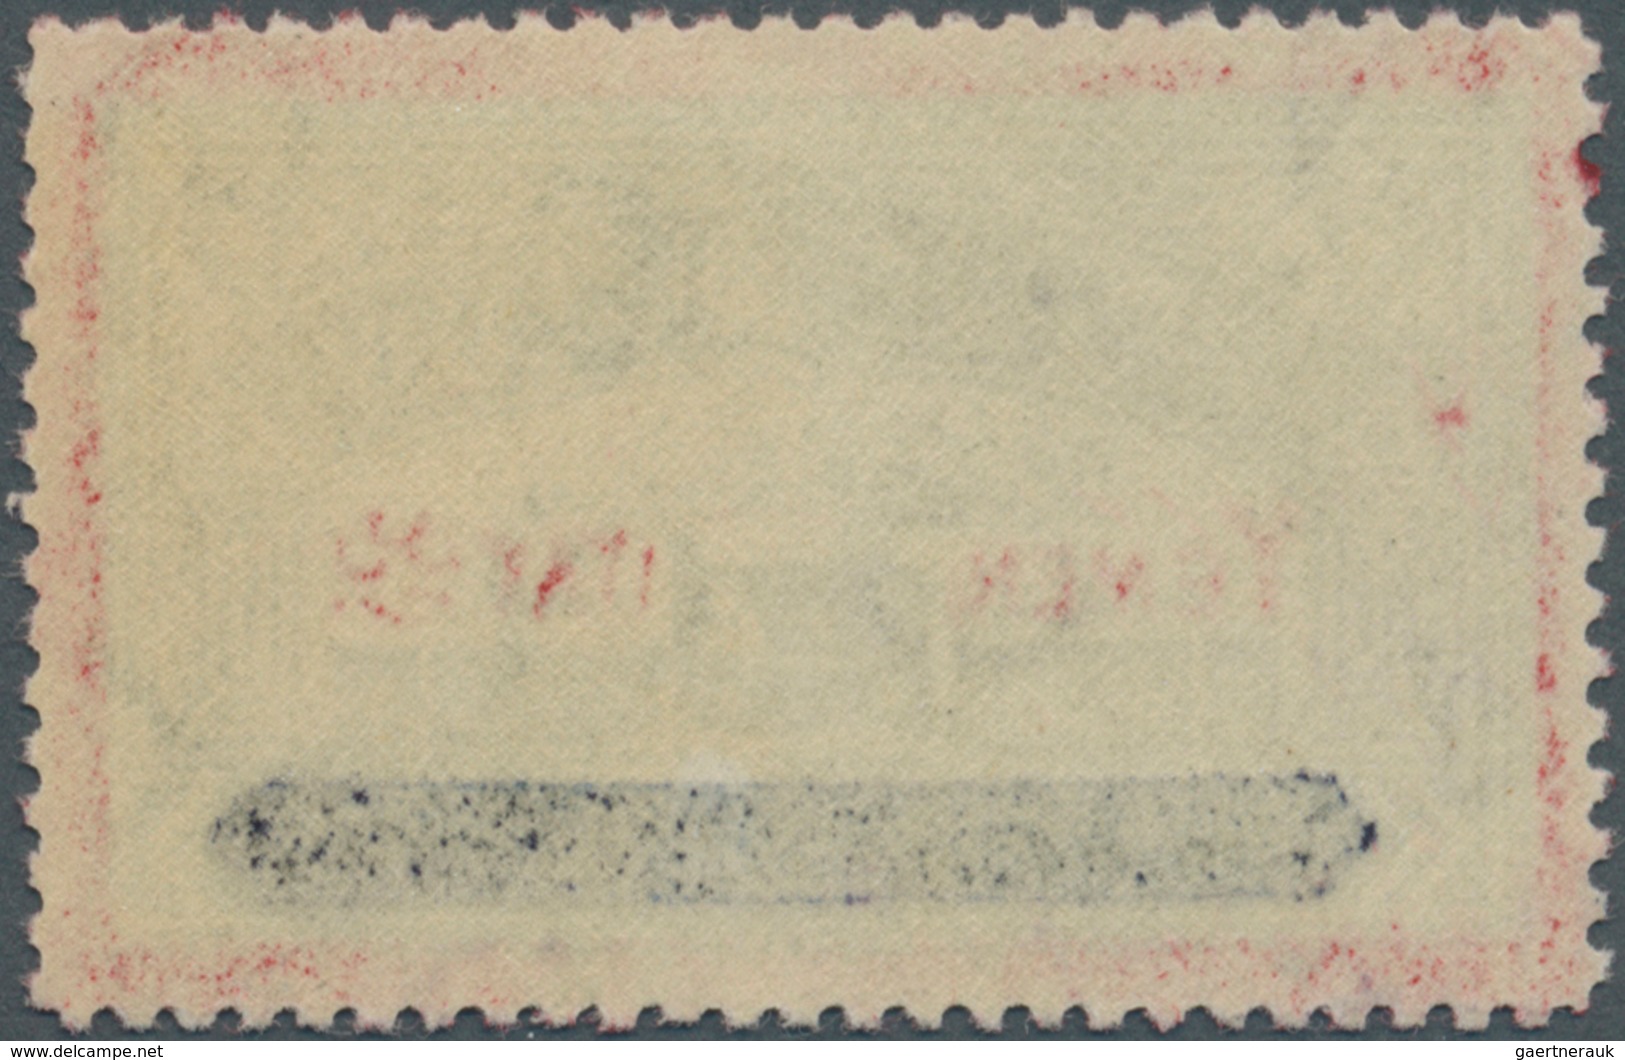 09118 Jemen - Königreich: 1963, Consular Official Stamp 10b. Red/black With Red Handstamp Overprint 'YEMEN - Jemen